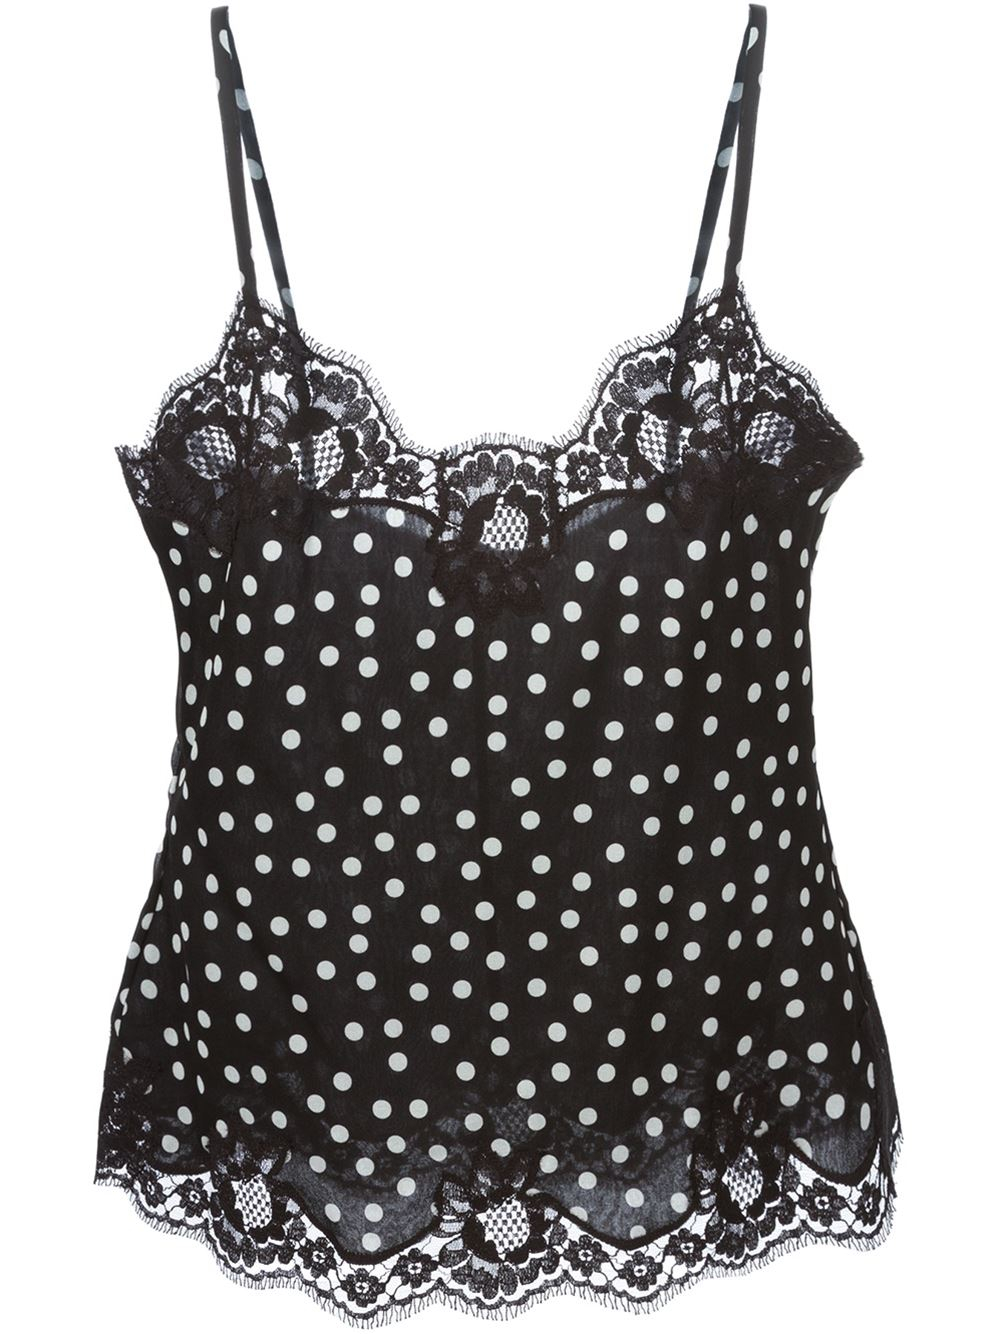 Lyst - Dolce & Gabbana Polka Dot Print Camisole in Black